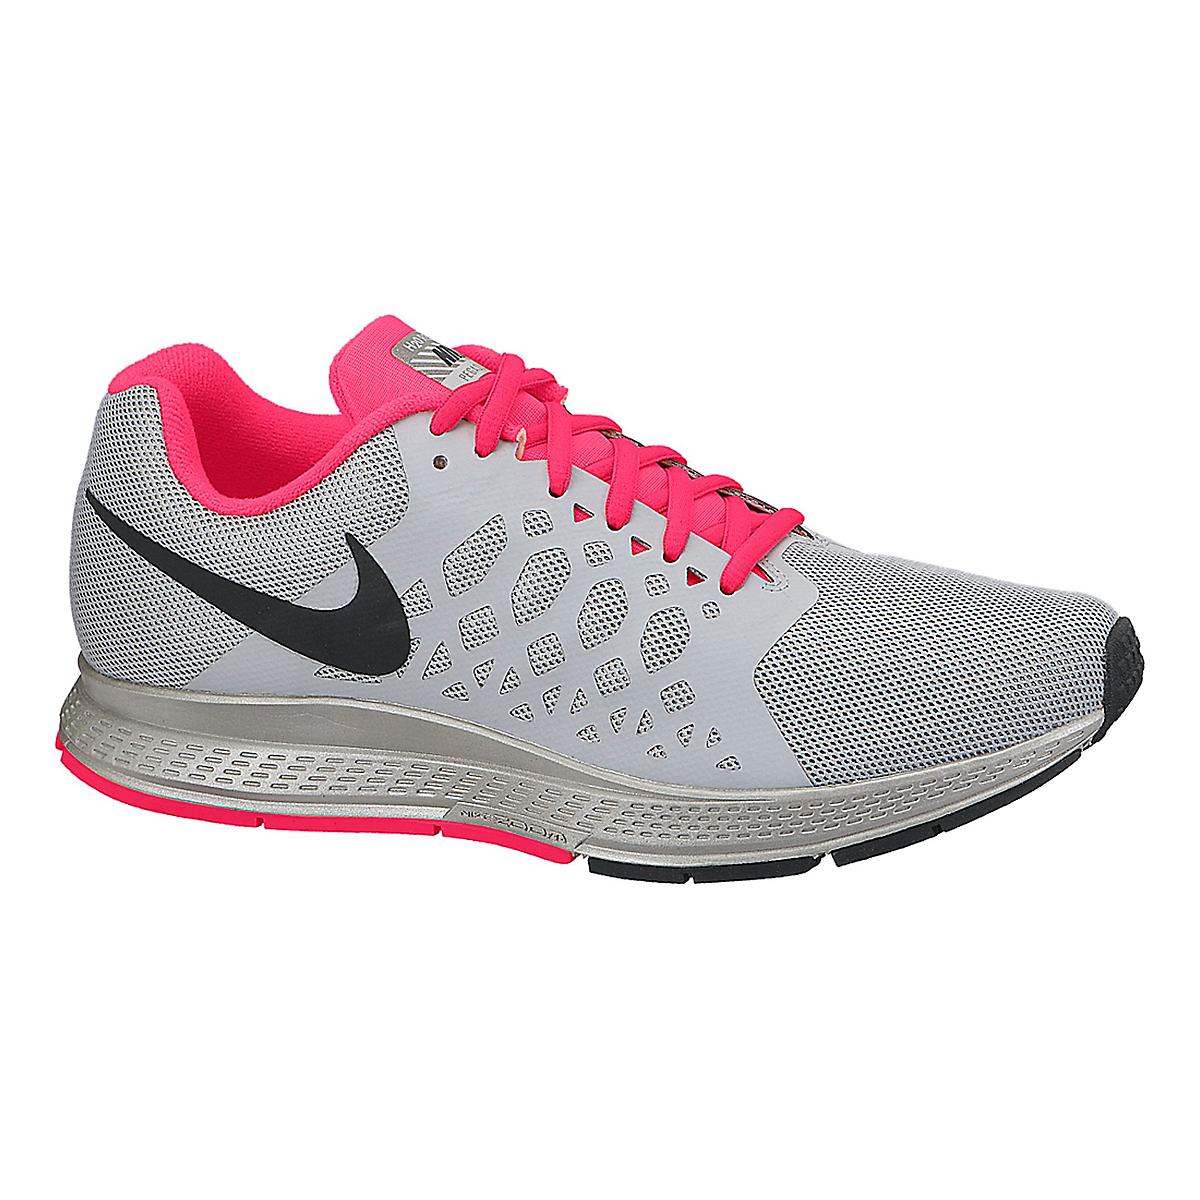 Womens Nike Air Zoom Pegasus 31 Flash Running Shoe at Road Runner Sports